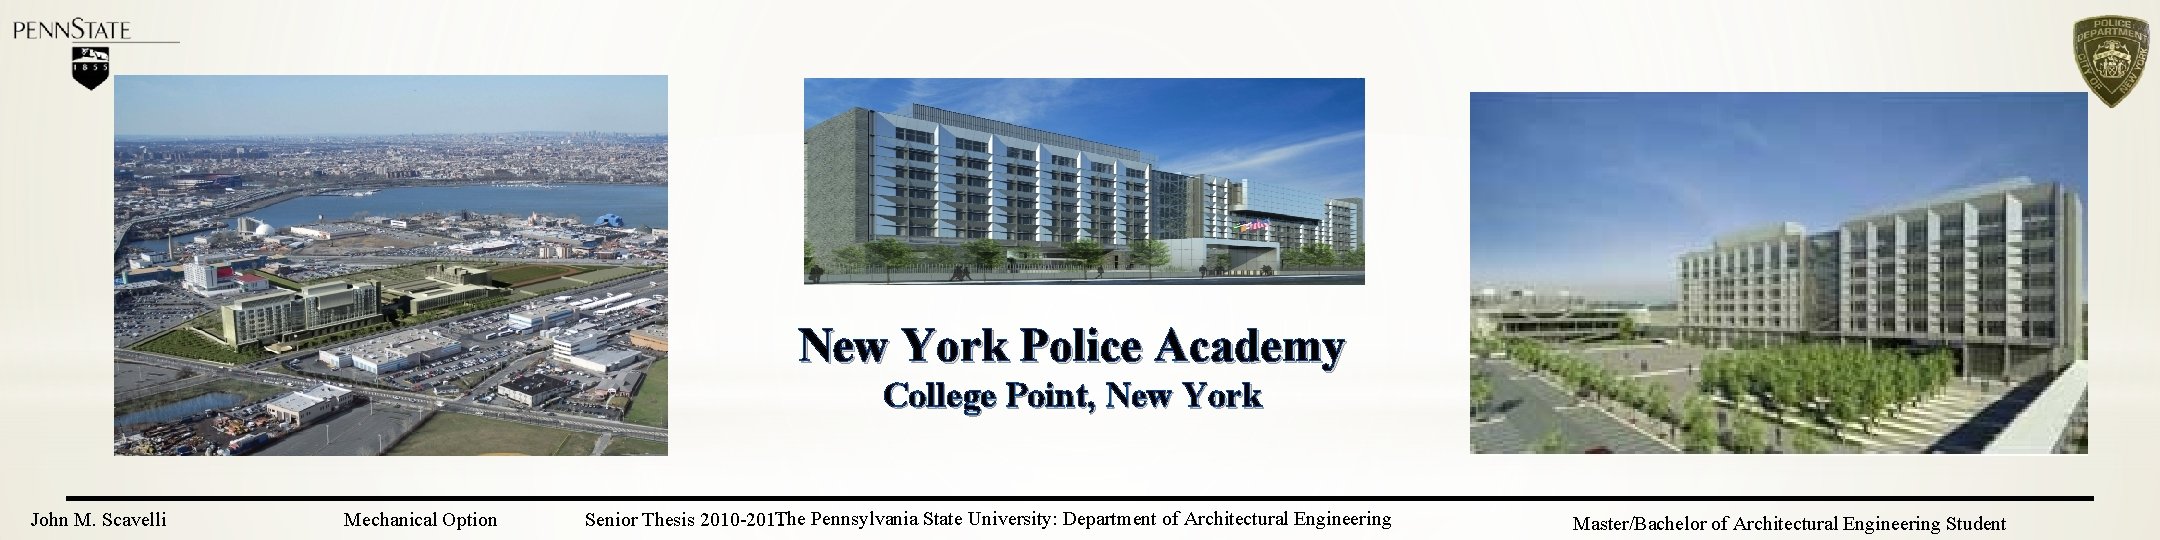 New York Police Academy College Point, New York John M. Scavelli Mechanical Option The